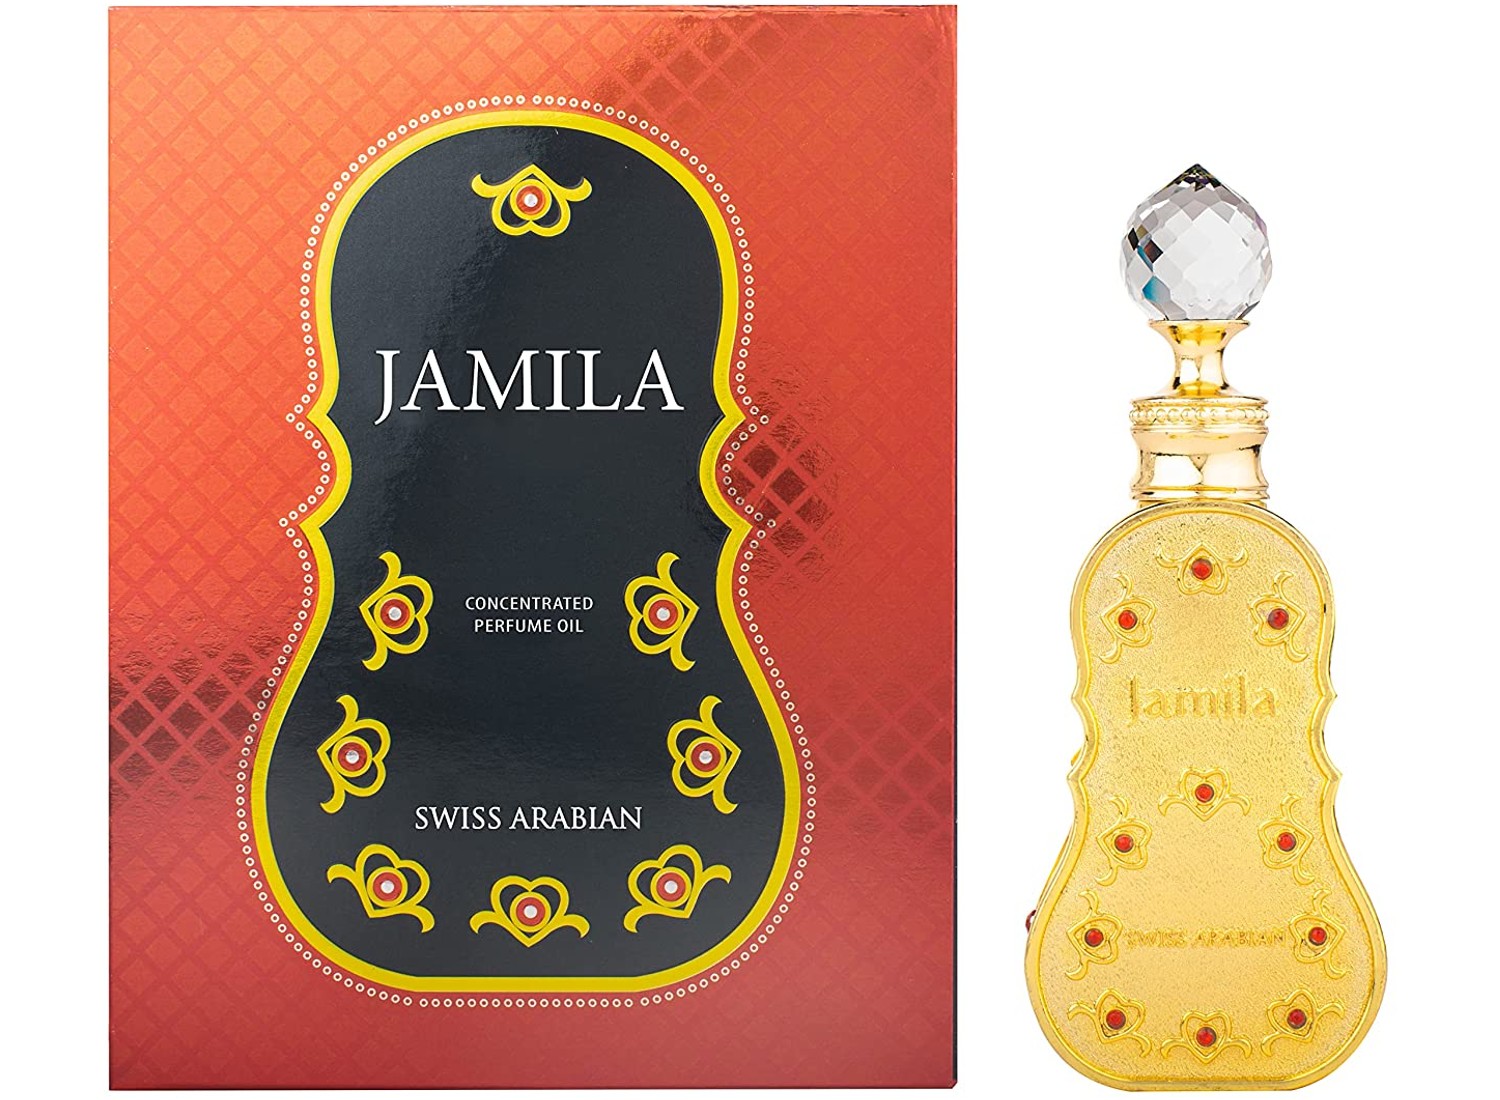 Swiss Arabian Jamila Perfume Oil